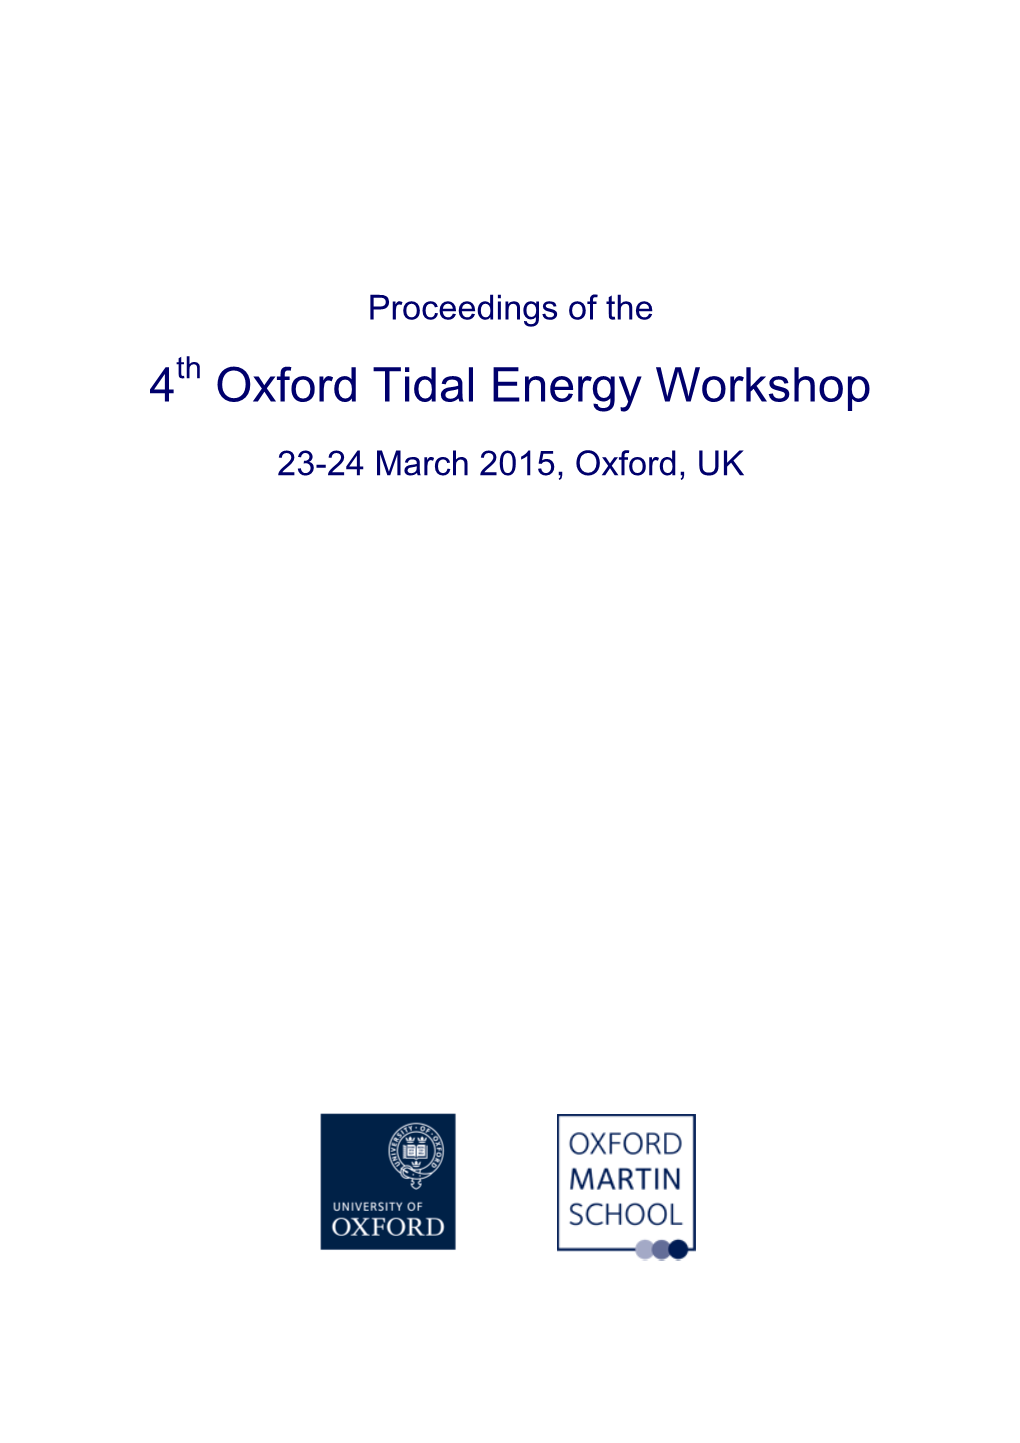 Proceedings of the 4Th Oxford Tidal Energy Workshop (OTE 2015)